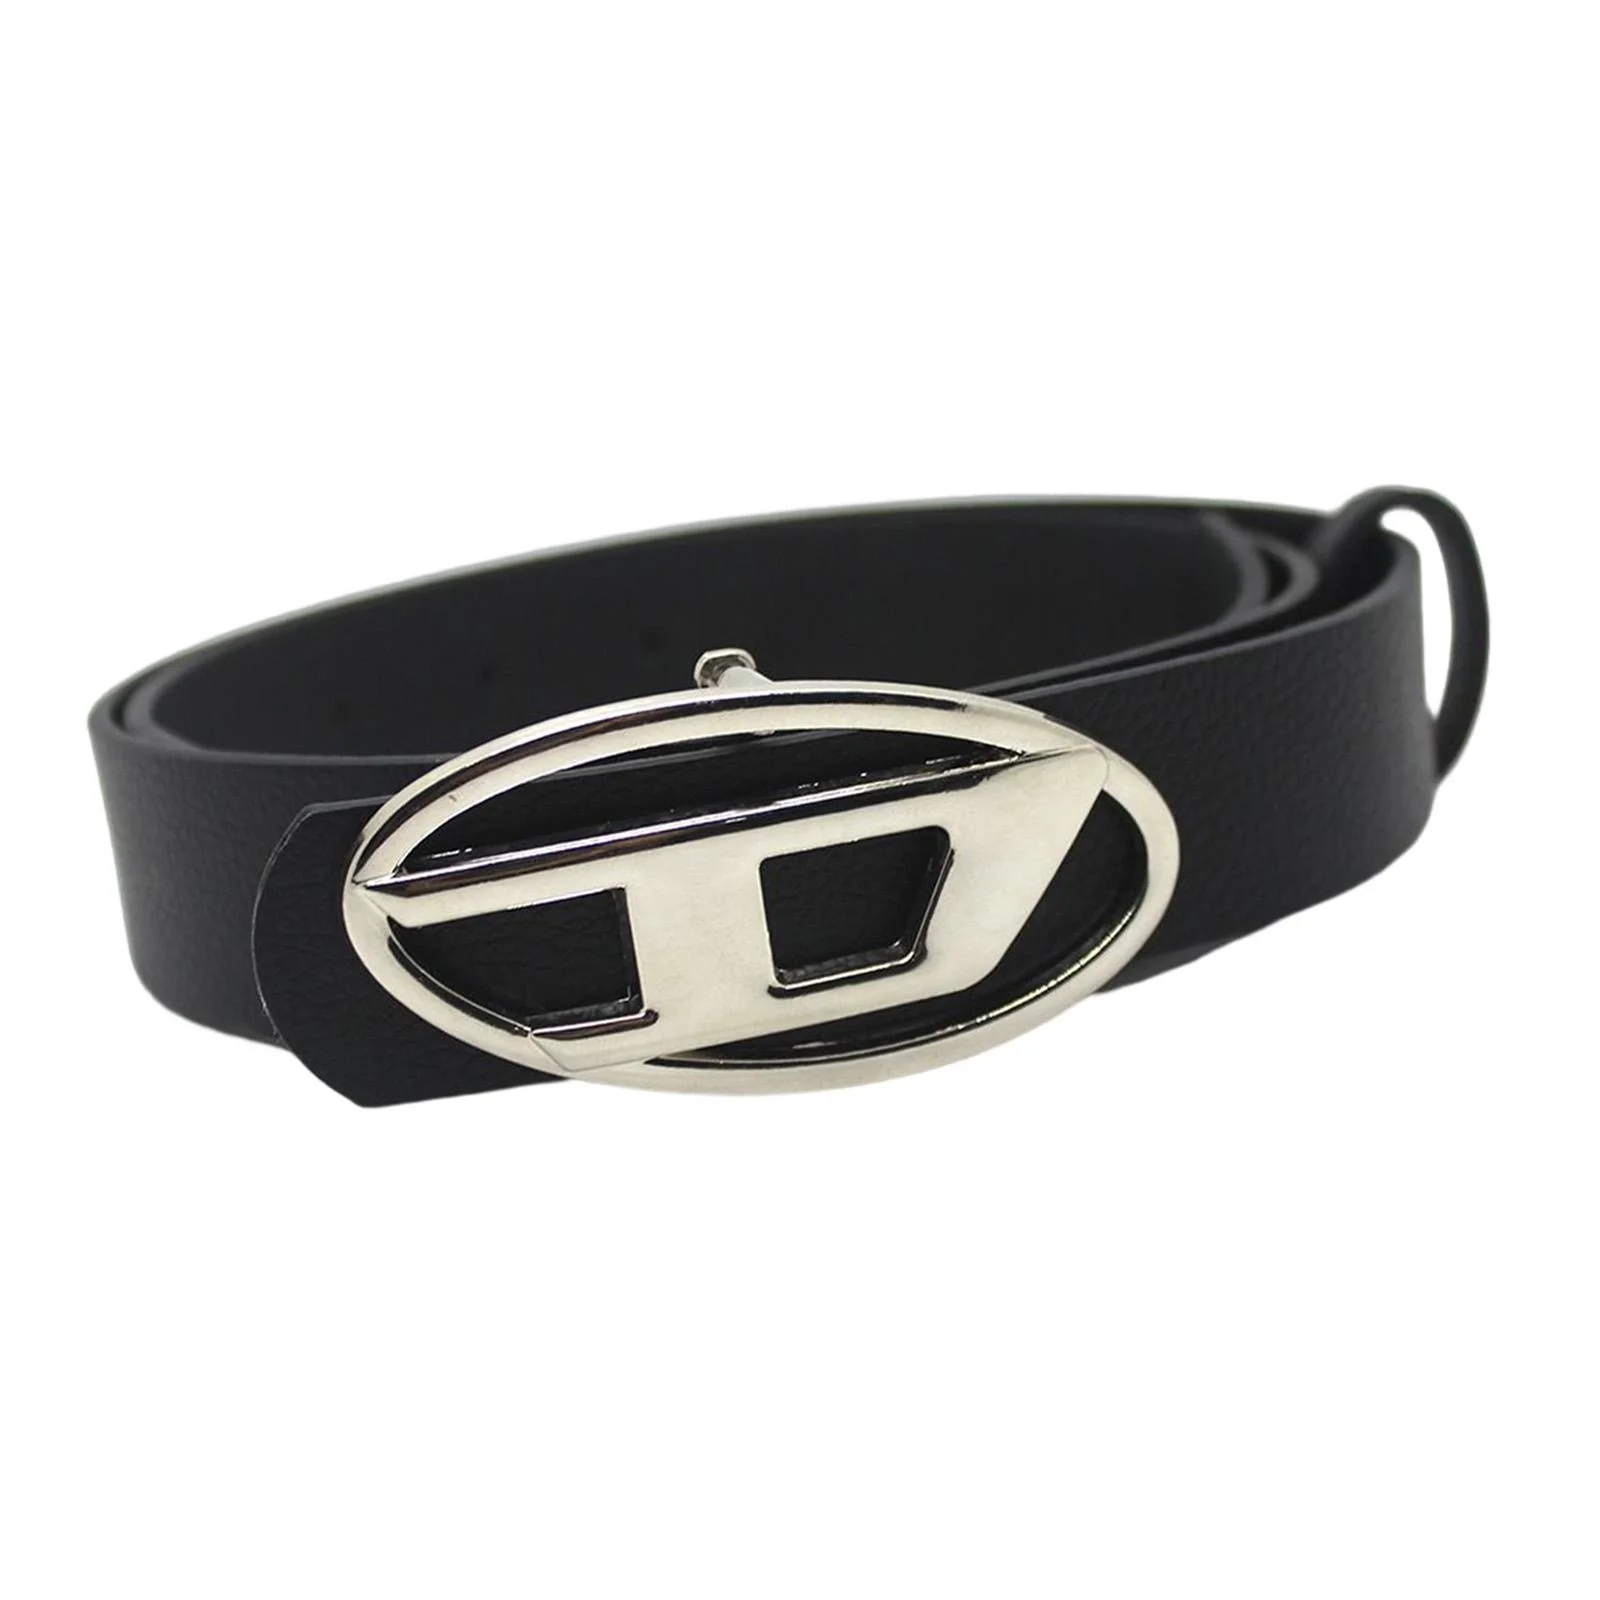 PU Leather Belt Letter D Oval Metal Snap Buckle Fashion 1.1" Width Uniform Belt Waist Belt Waisand Lady Belt for Pants Trendy